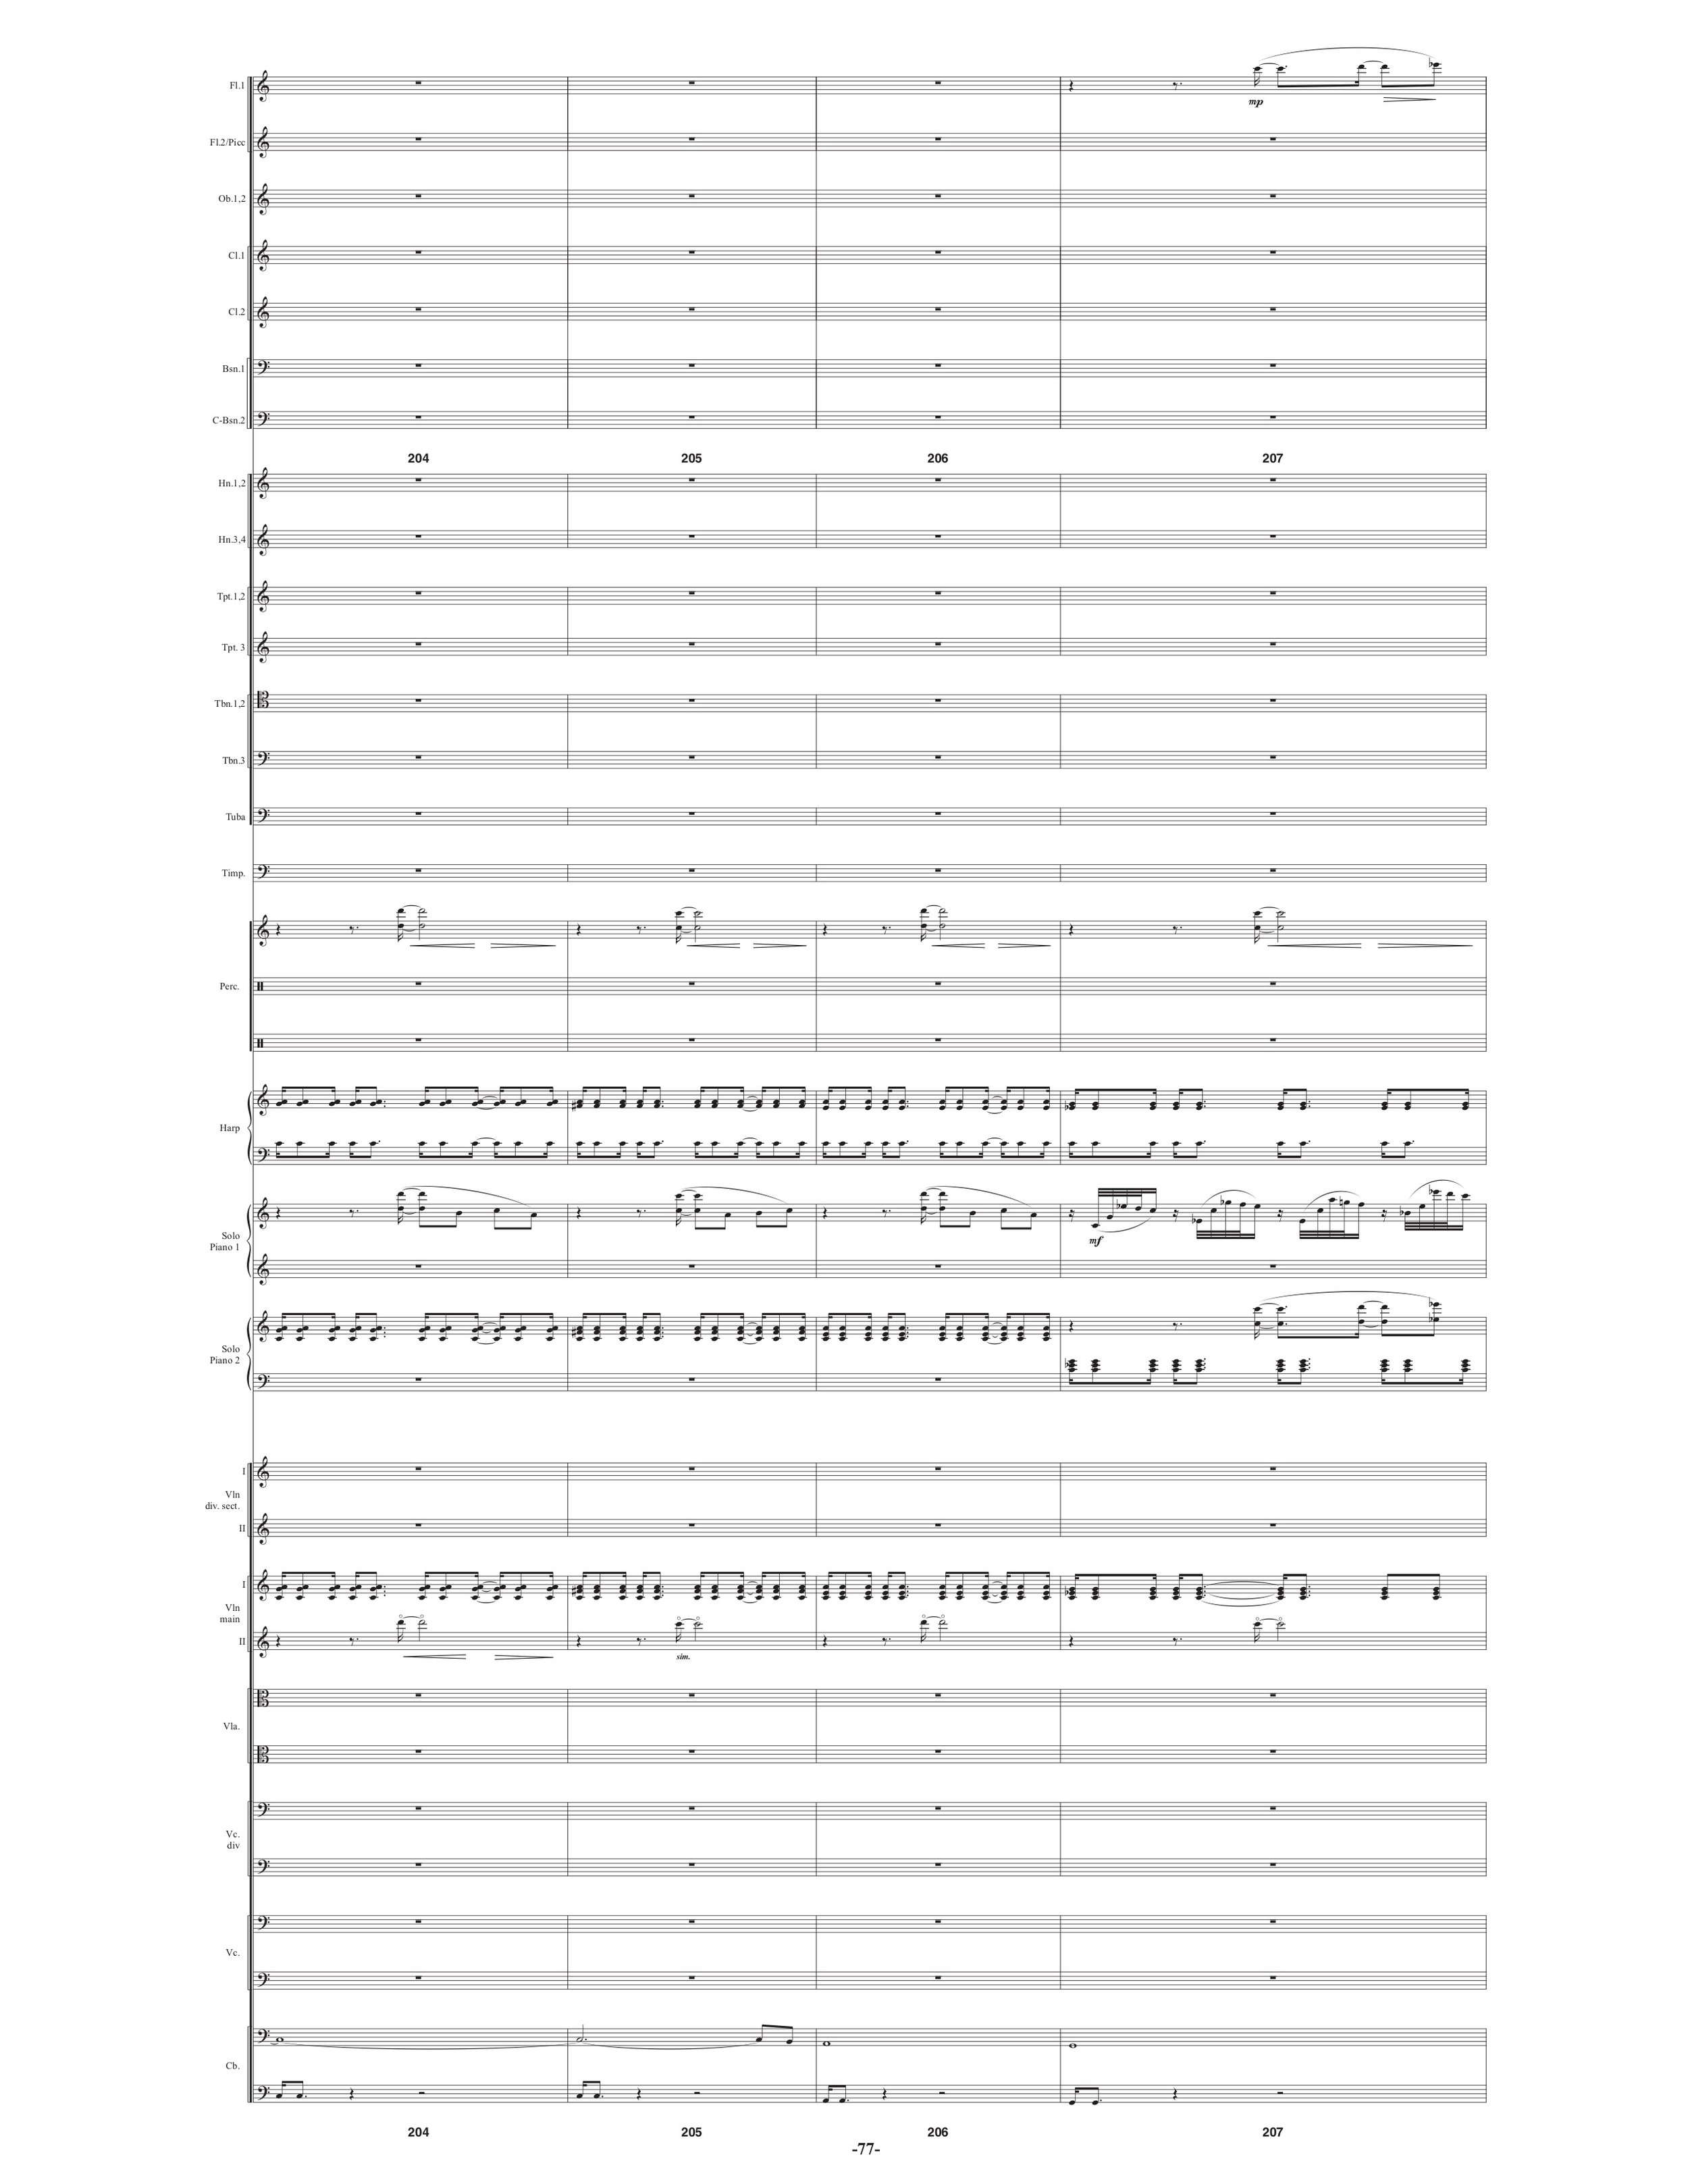 Symphony_Orch & 2 Pianos p82.jpg